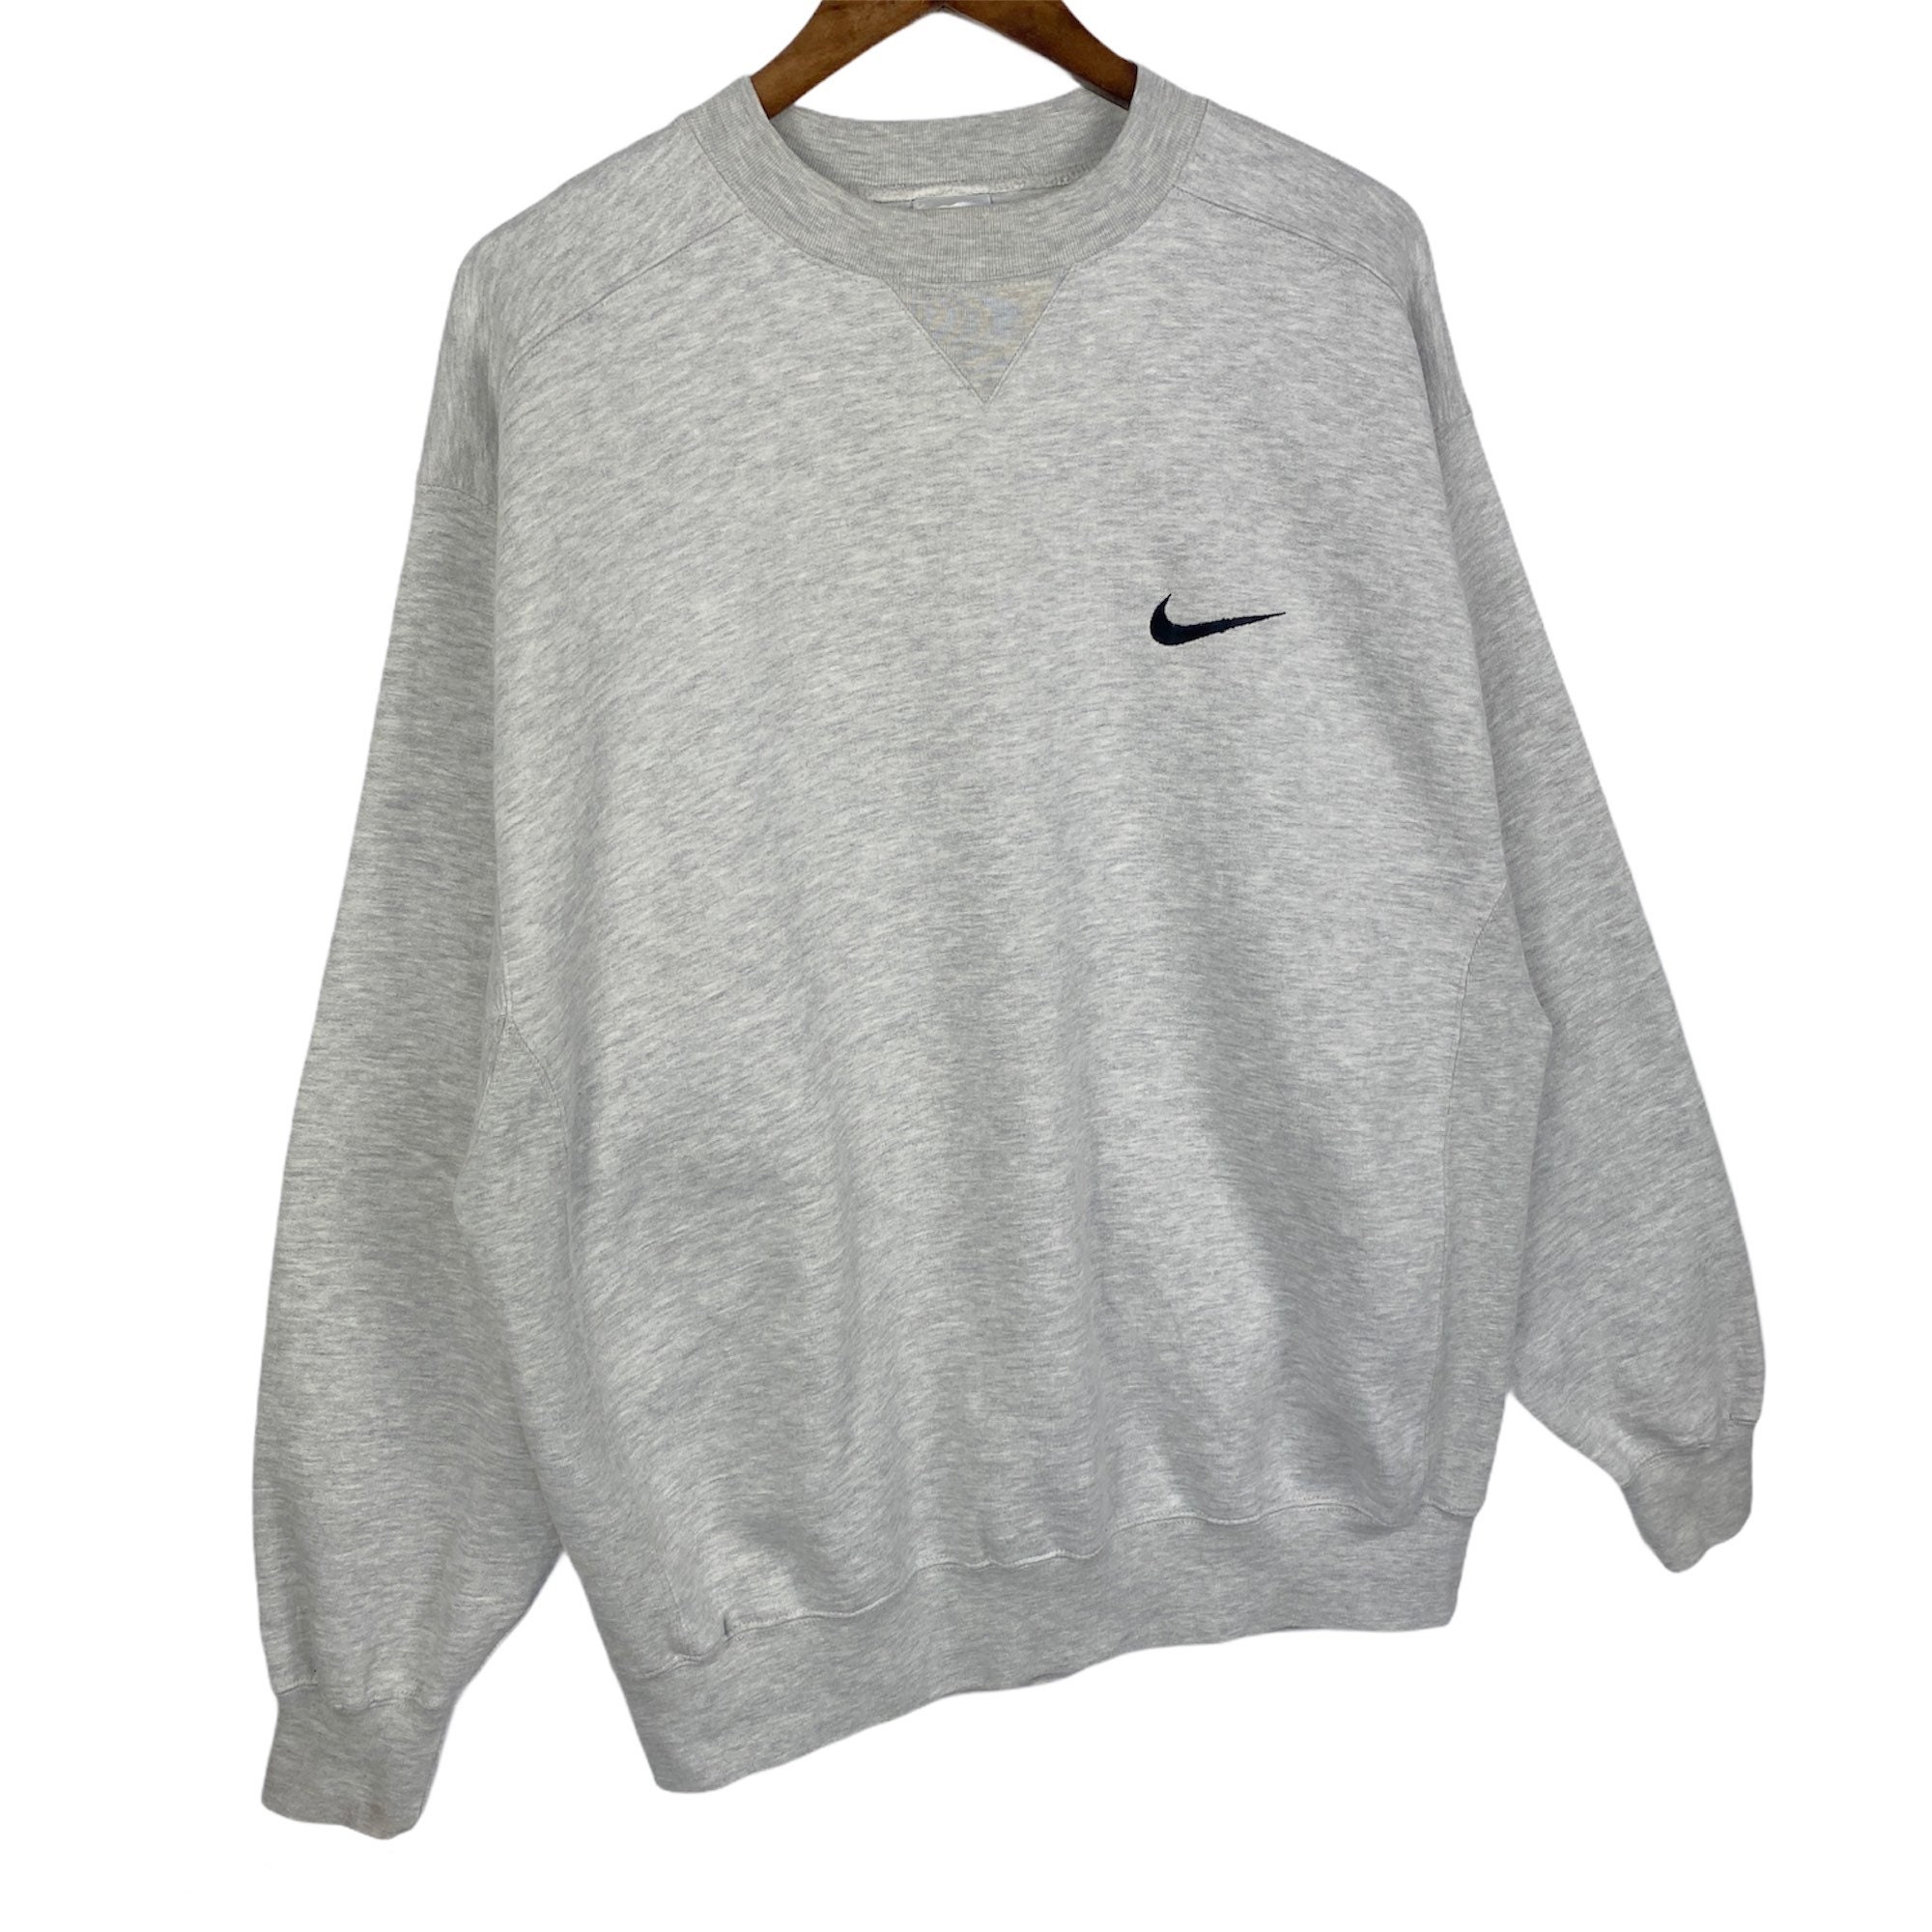 Nike Black Secondary Crew Sweatshirt Size Small | Cavaliers